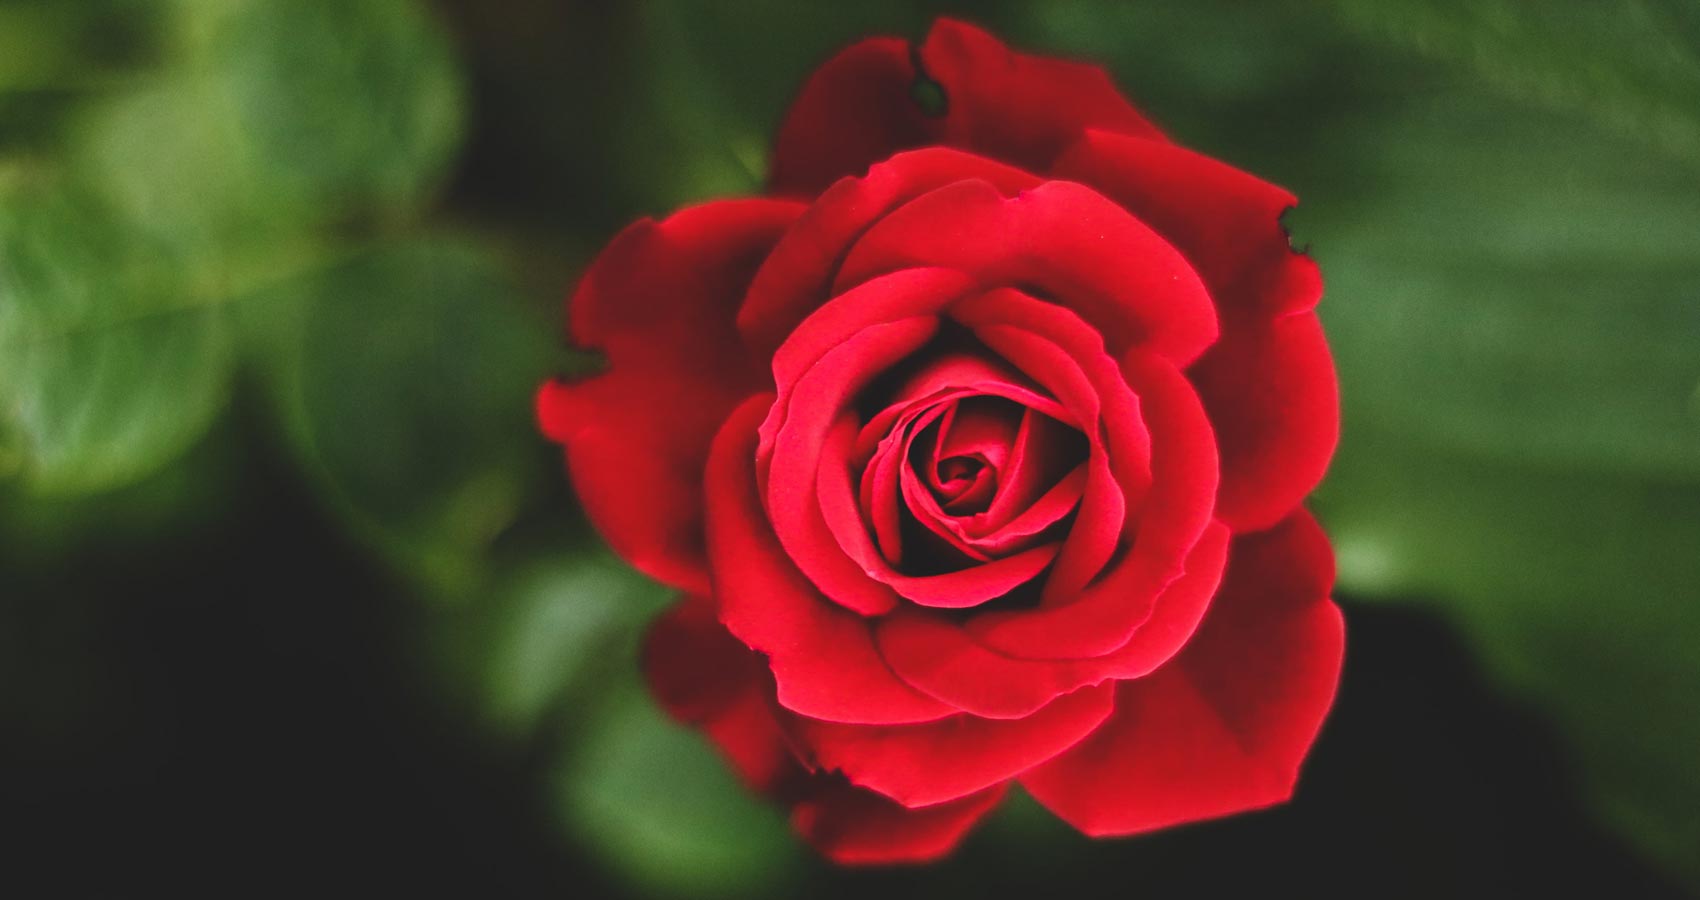 Red Rose, a poem by Bhakta Bahadur Basnet at Spillwords.com